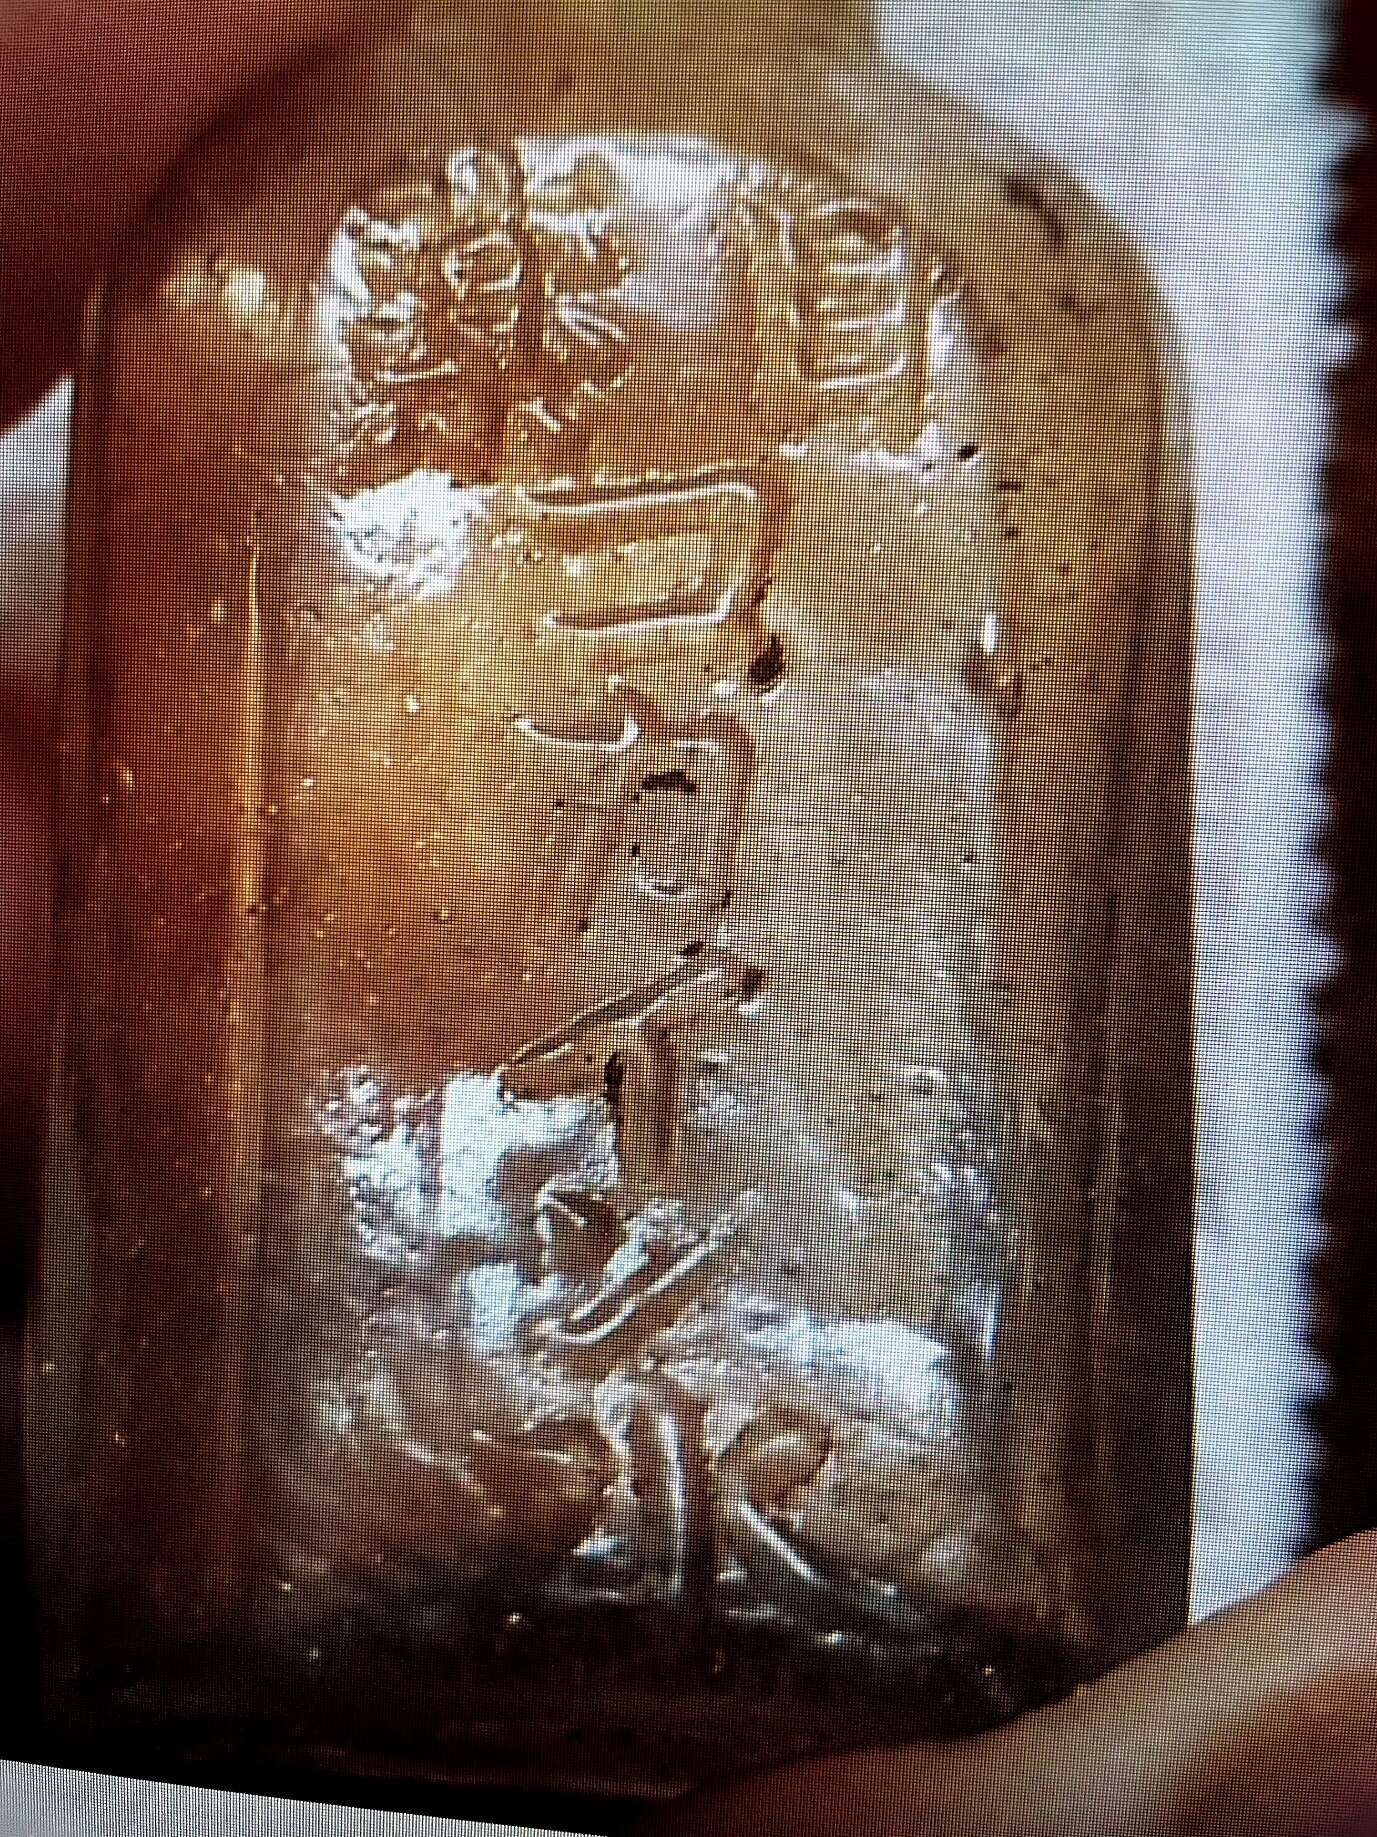 cocaine eye drops written in Japanese on glass